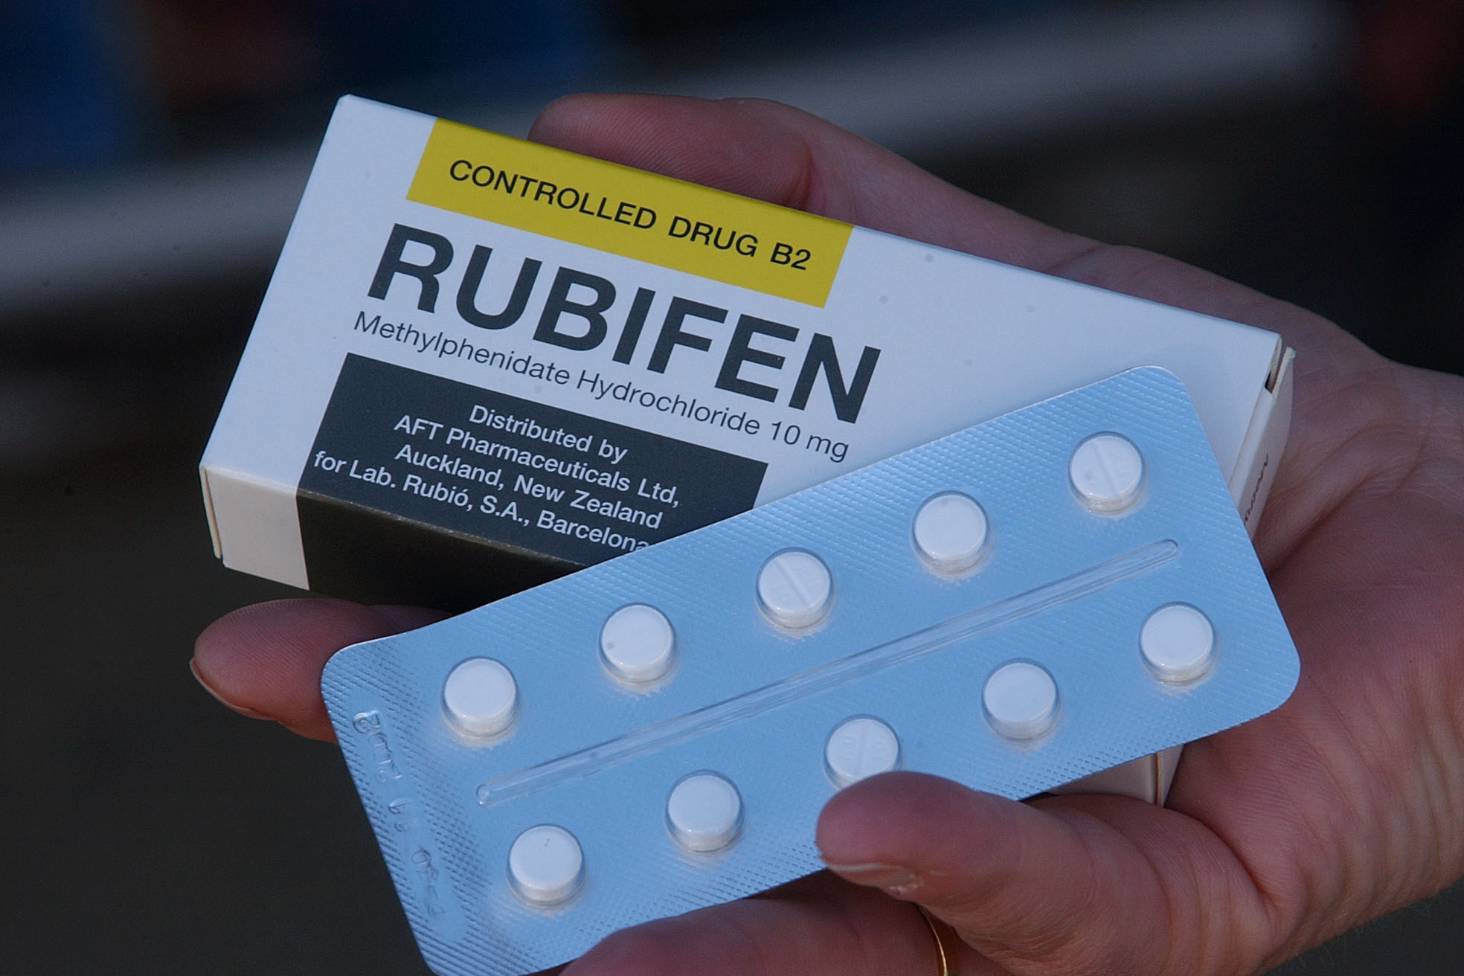 Comprar Rubifen,Ritalin,Concerta,Adderall,Redotex, Mazindol etc